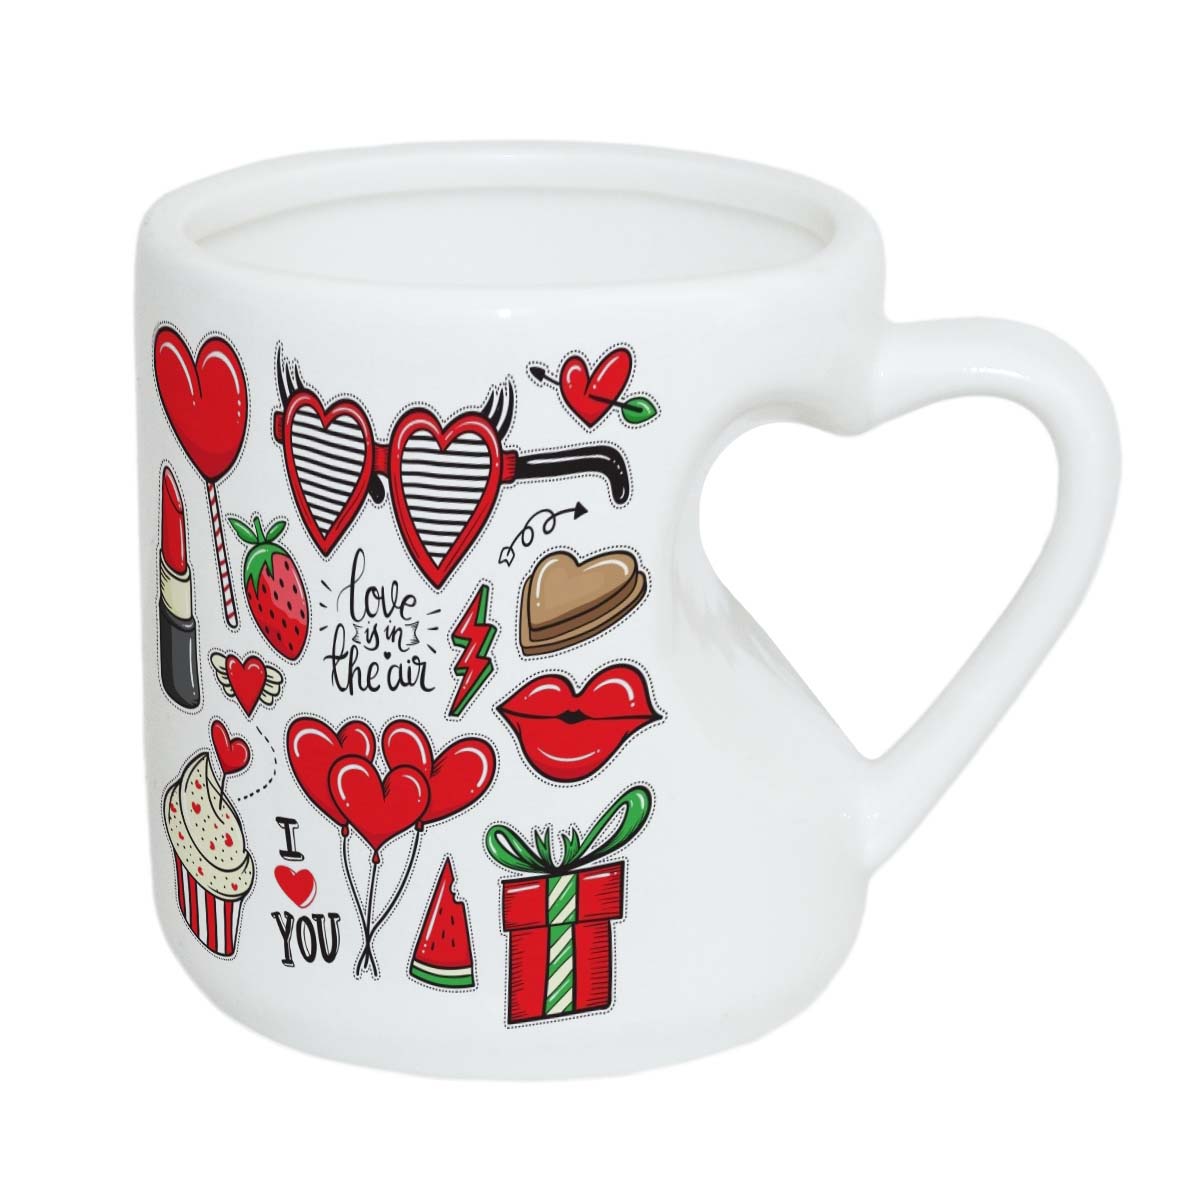 Sublimation mug with heart shape handle